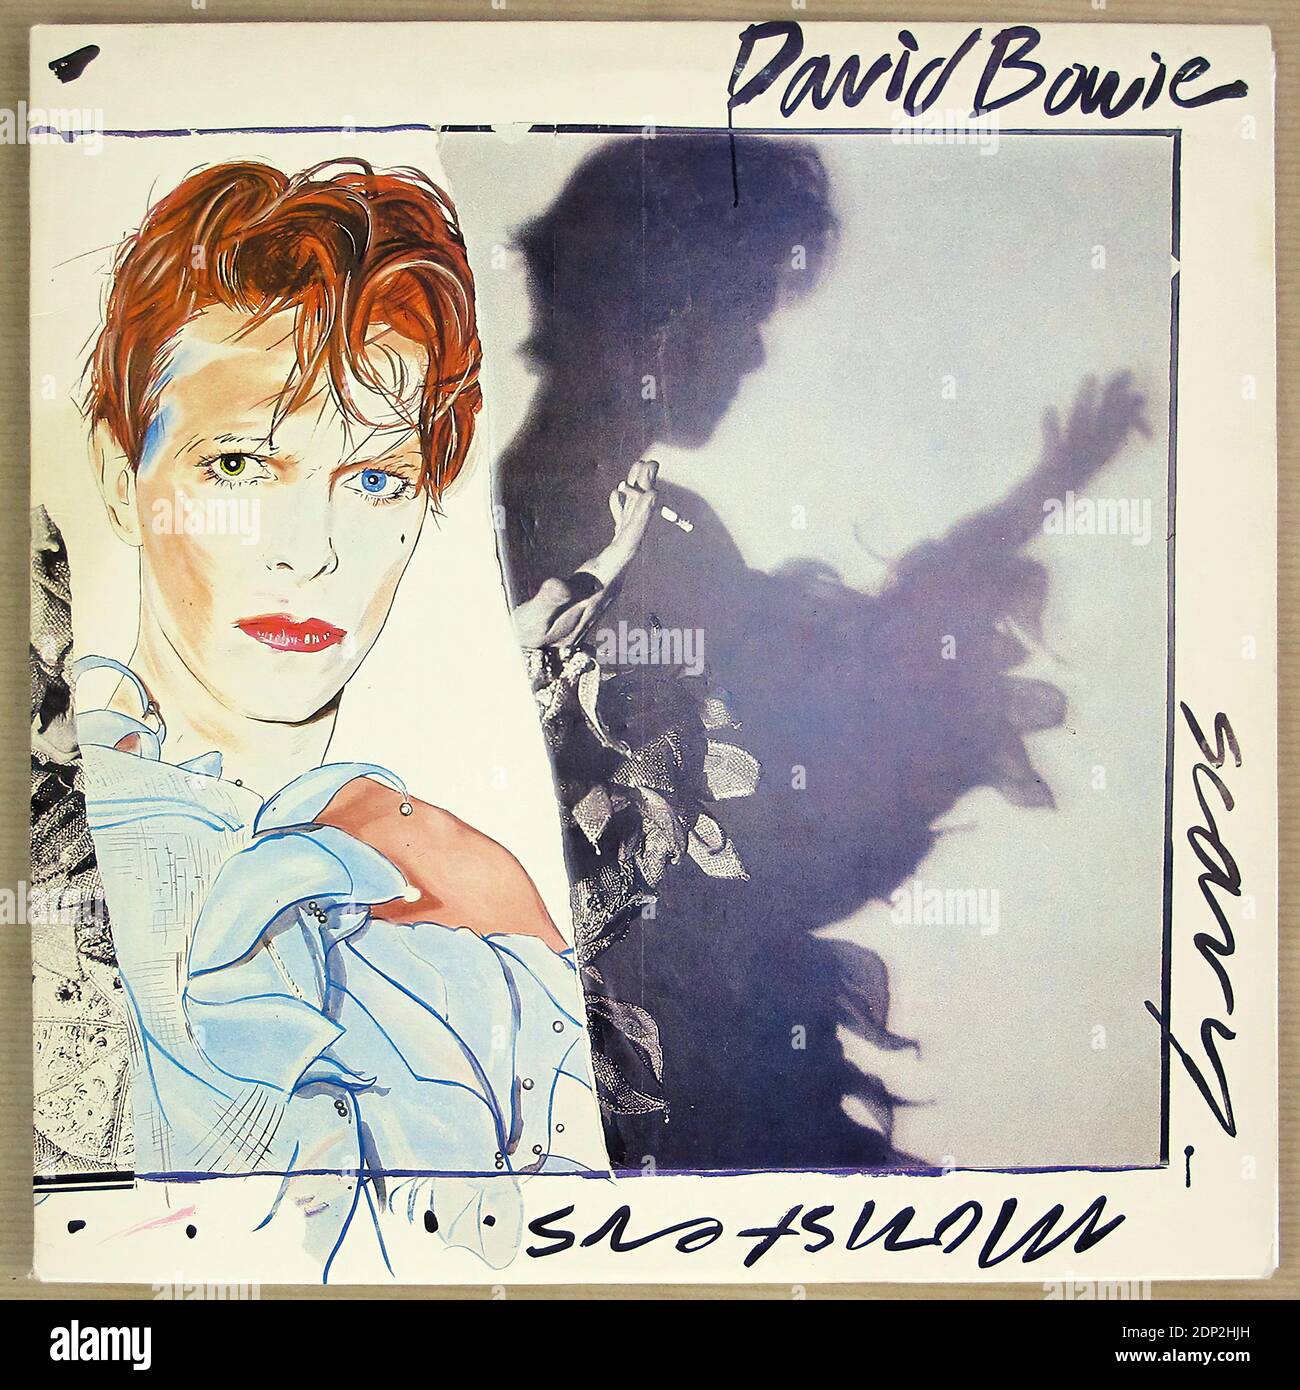 DAVID BOWIE SCARY MONSTERS (AND SUPER CREEPS) LYRICS SLEEVE 12 vLP VINYL -  Vintage Vinyl Record Cover Stock Photo - Alamy